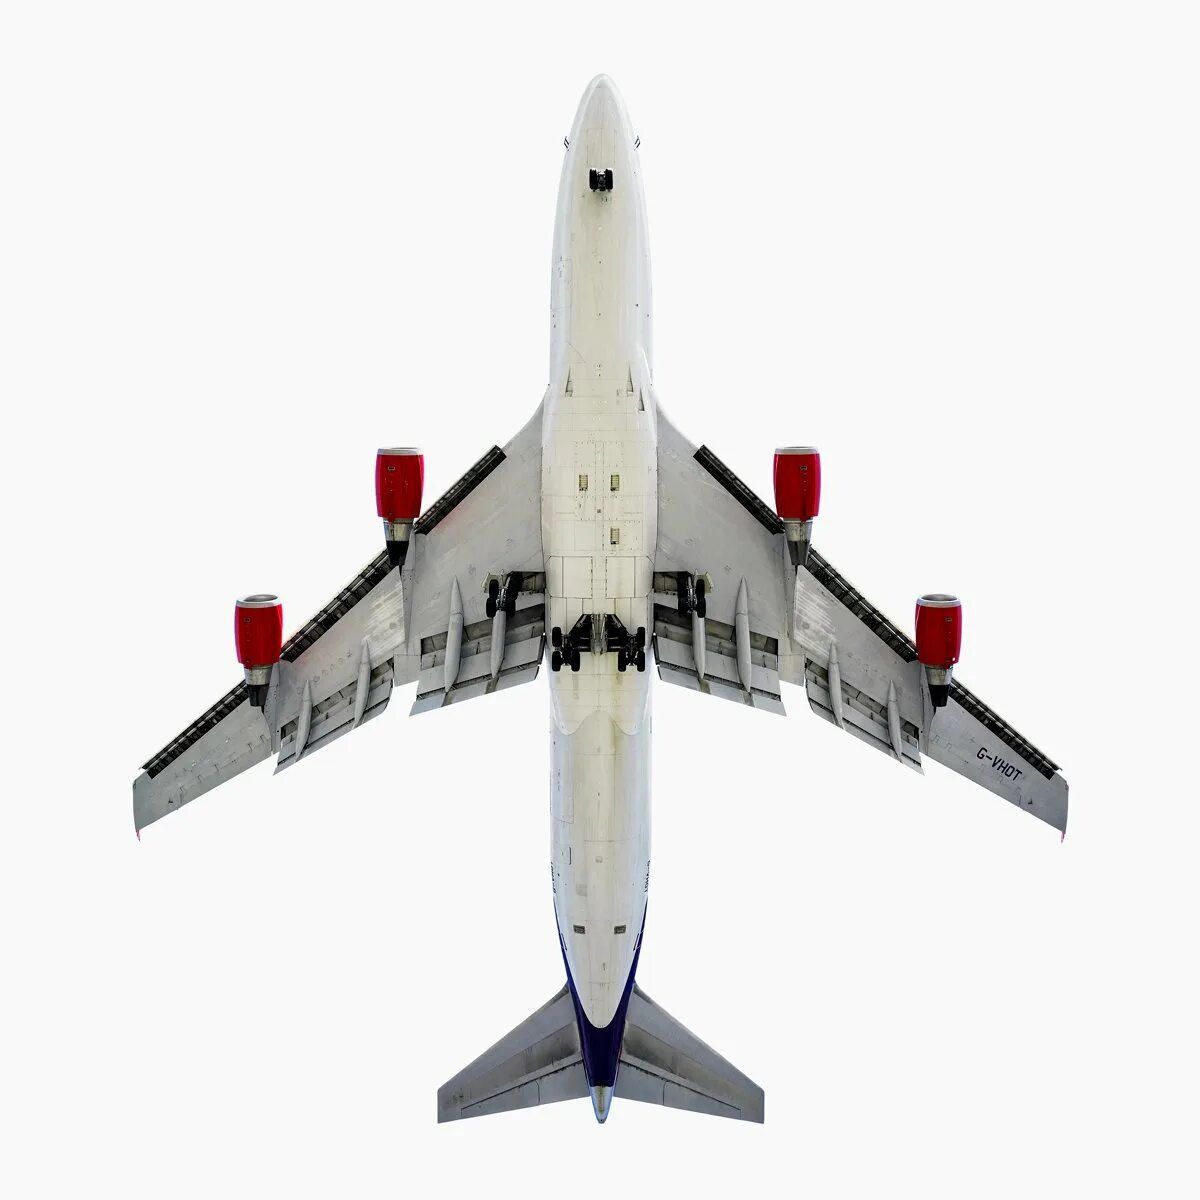 Самолет снизу PNG. Самолет вид снизу. Самолет PNG прозрачный фон вид снизу. Авиамодель Боинг 747.